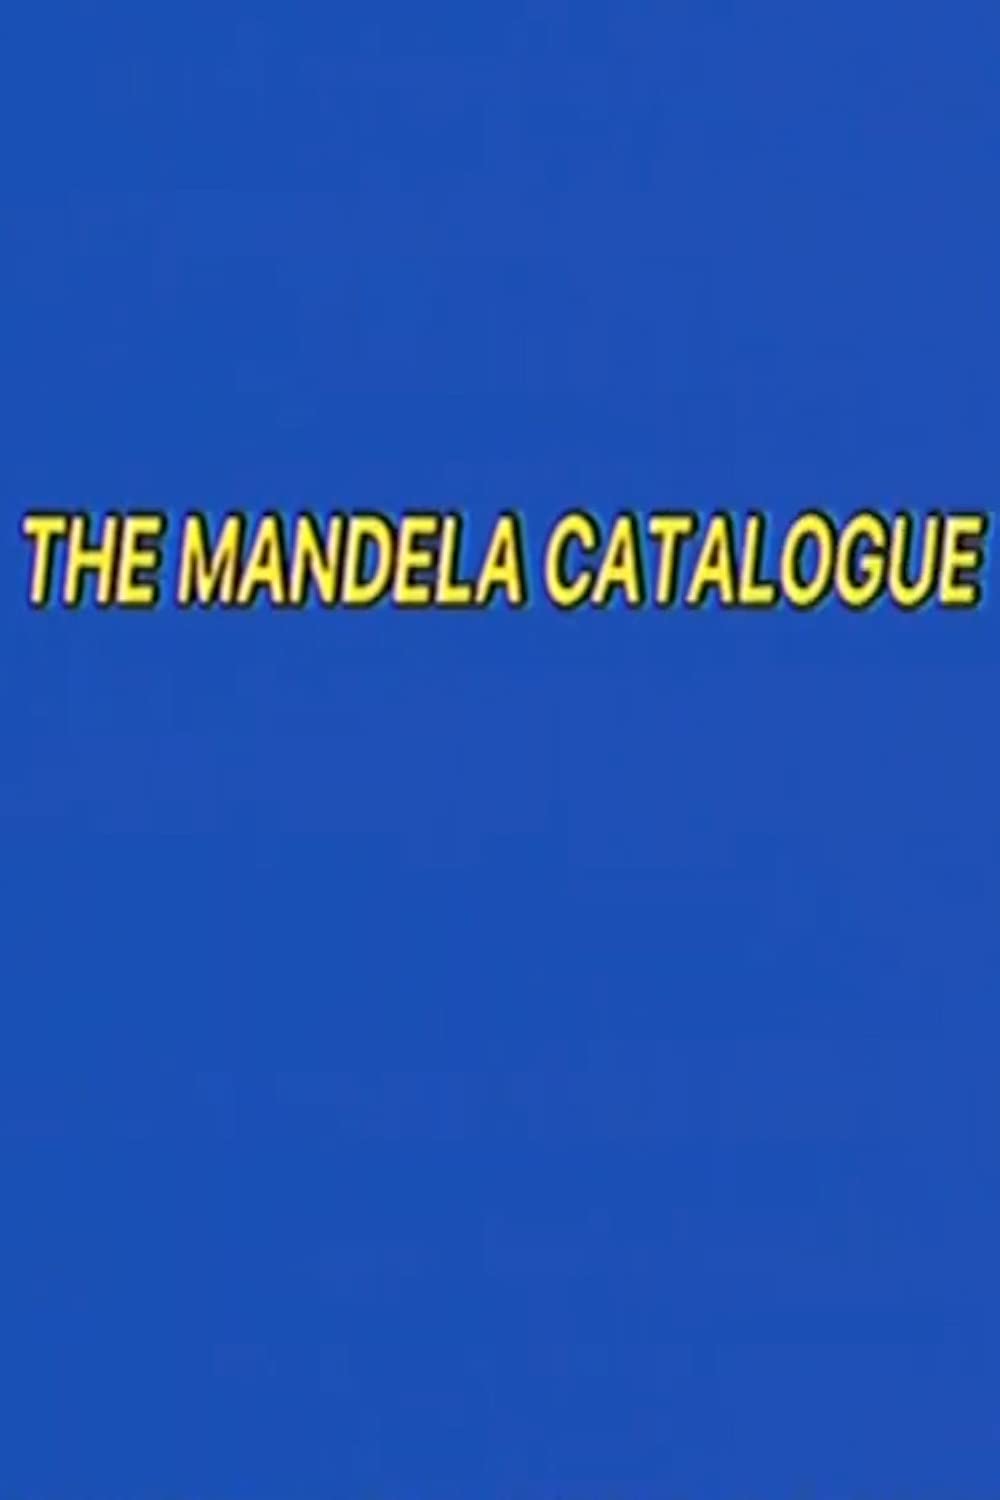 The Mandela Catalogue Wallpapers - Wallpaper Cave